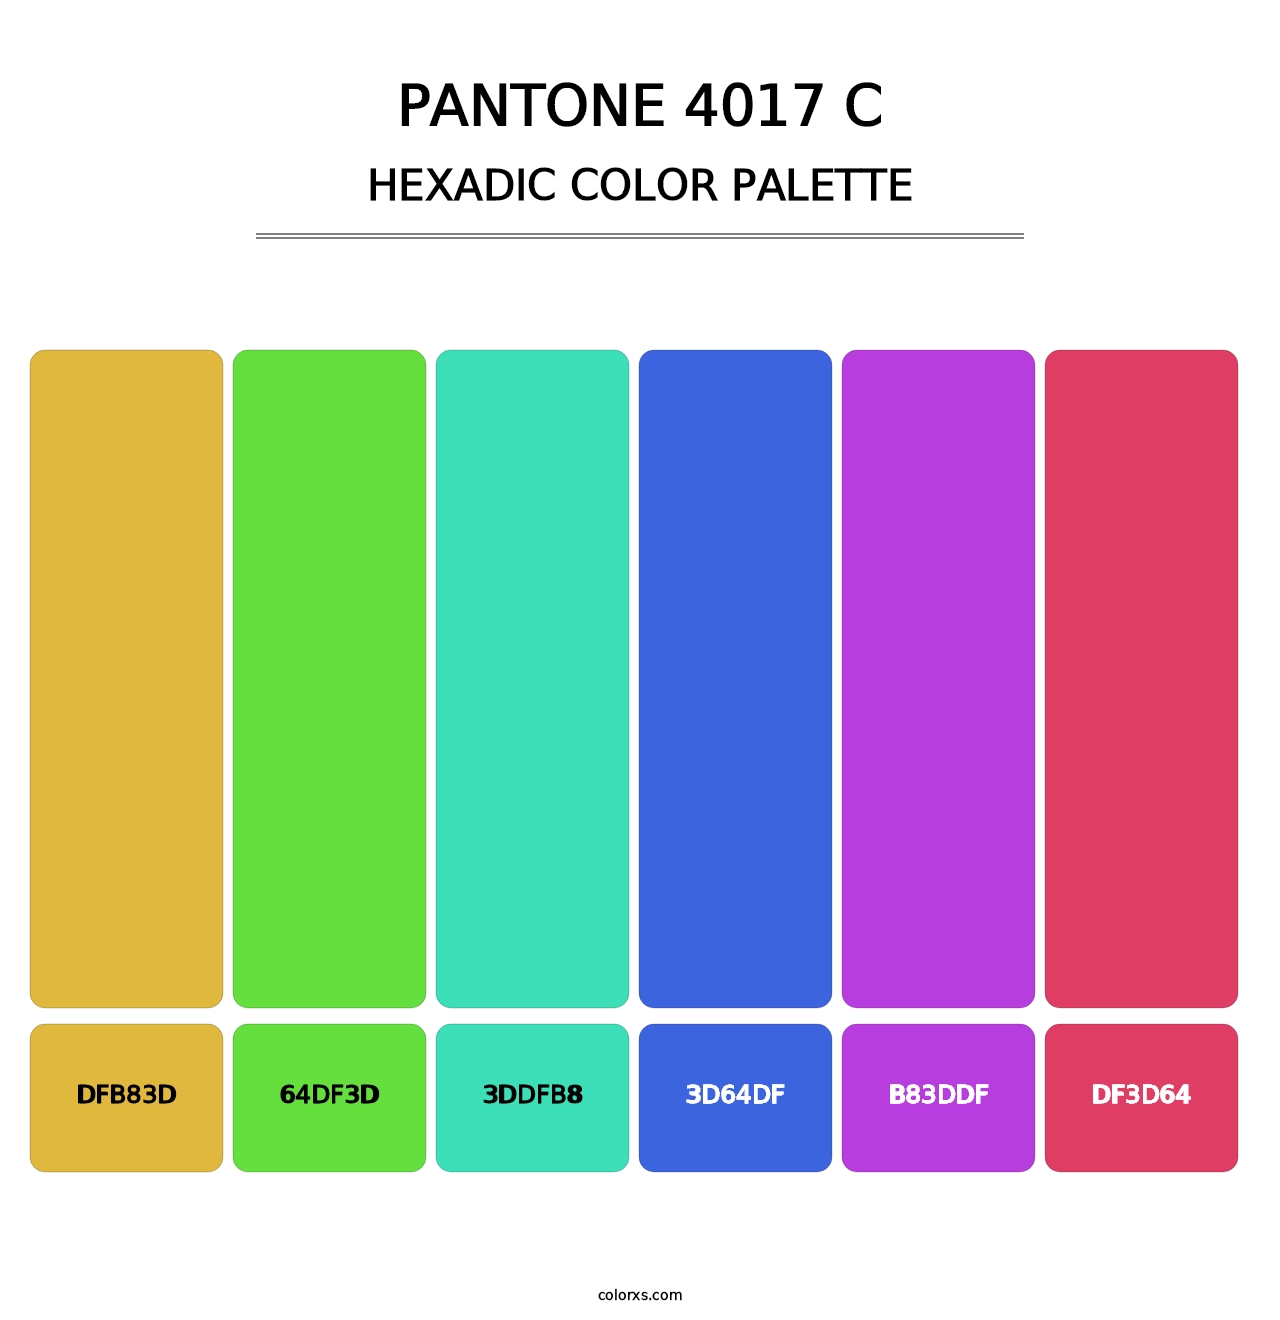 PANTONE 4017 C - Hexadic Color Palette